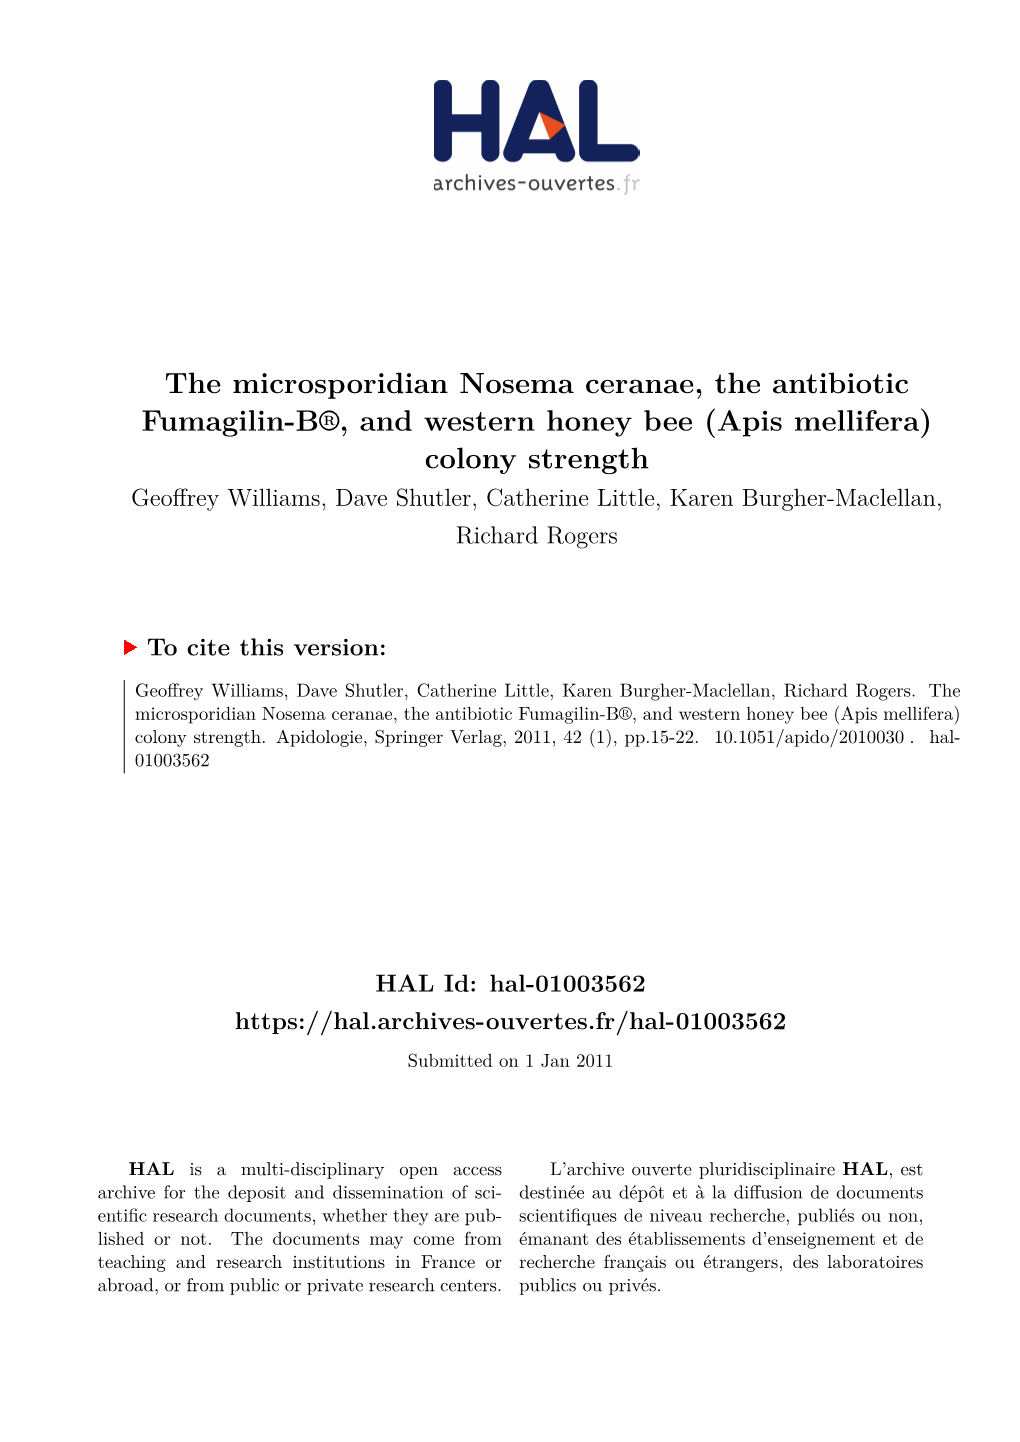 The Microsporidian Nosema Ceranae, the Antibiotic